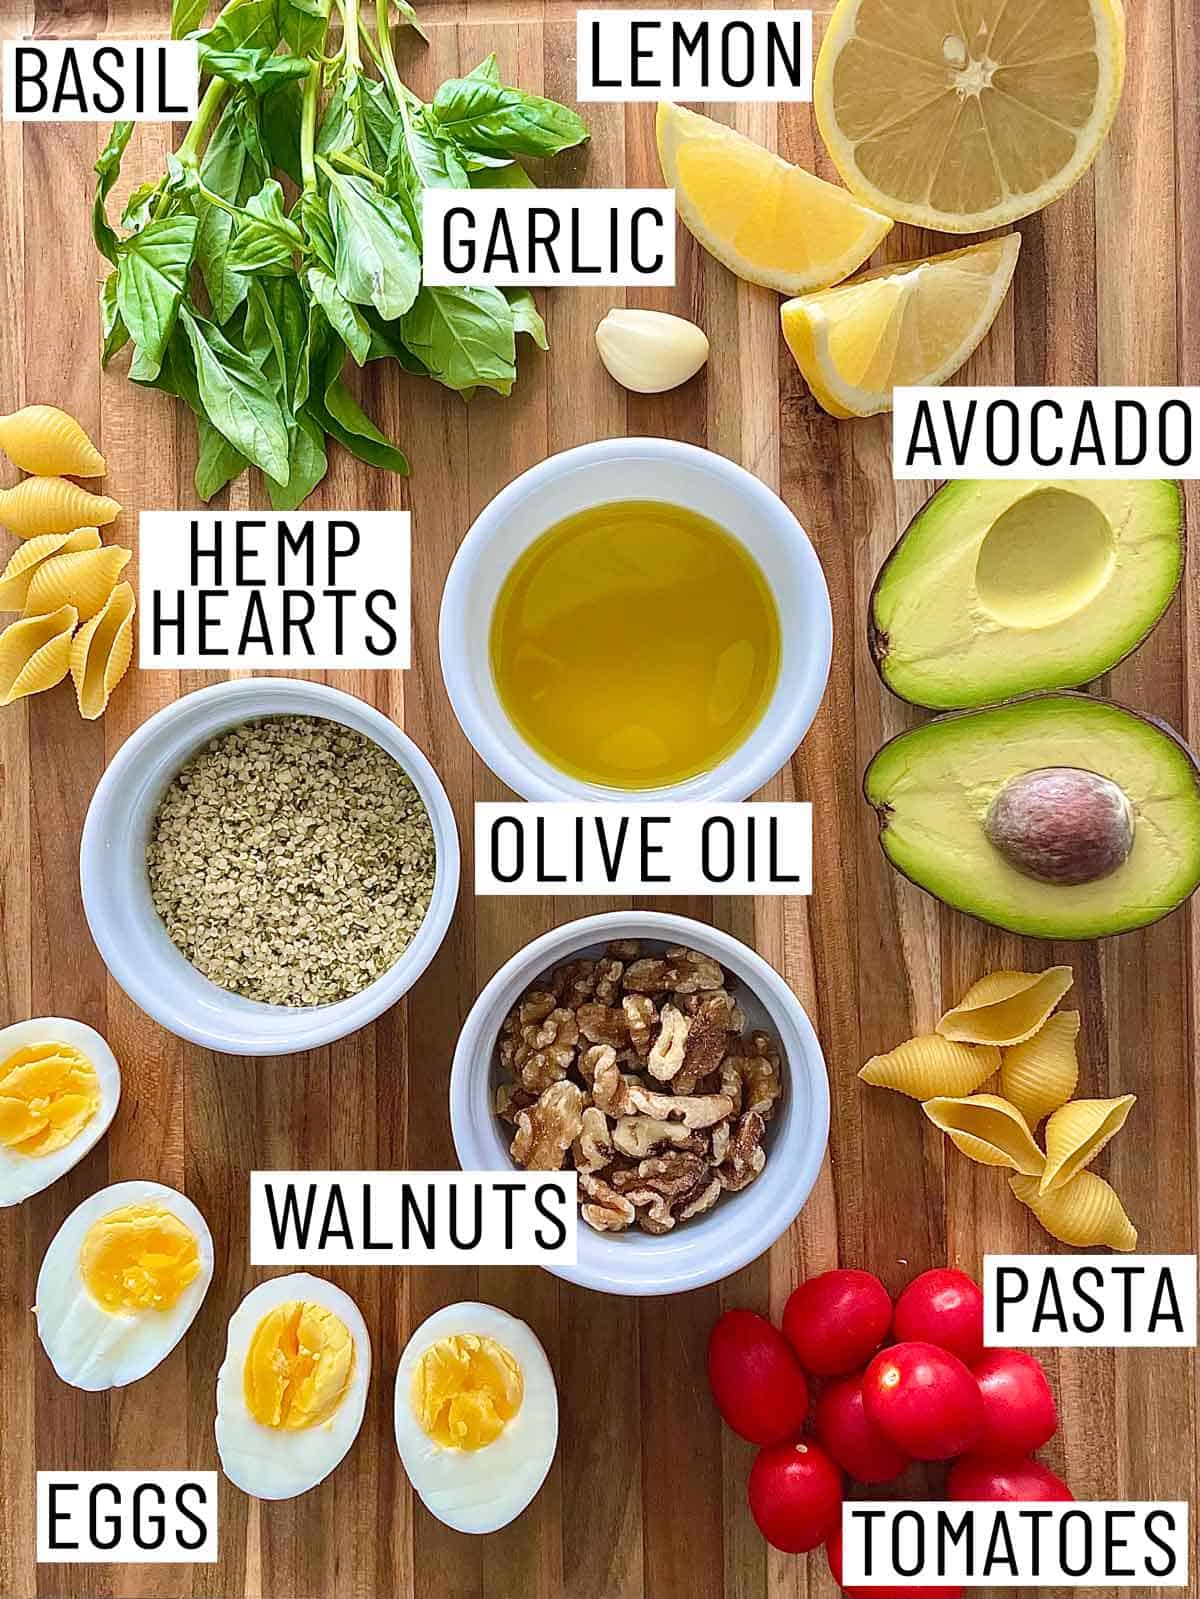 Ingredients needed to make avocado pasta.